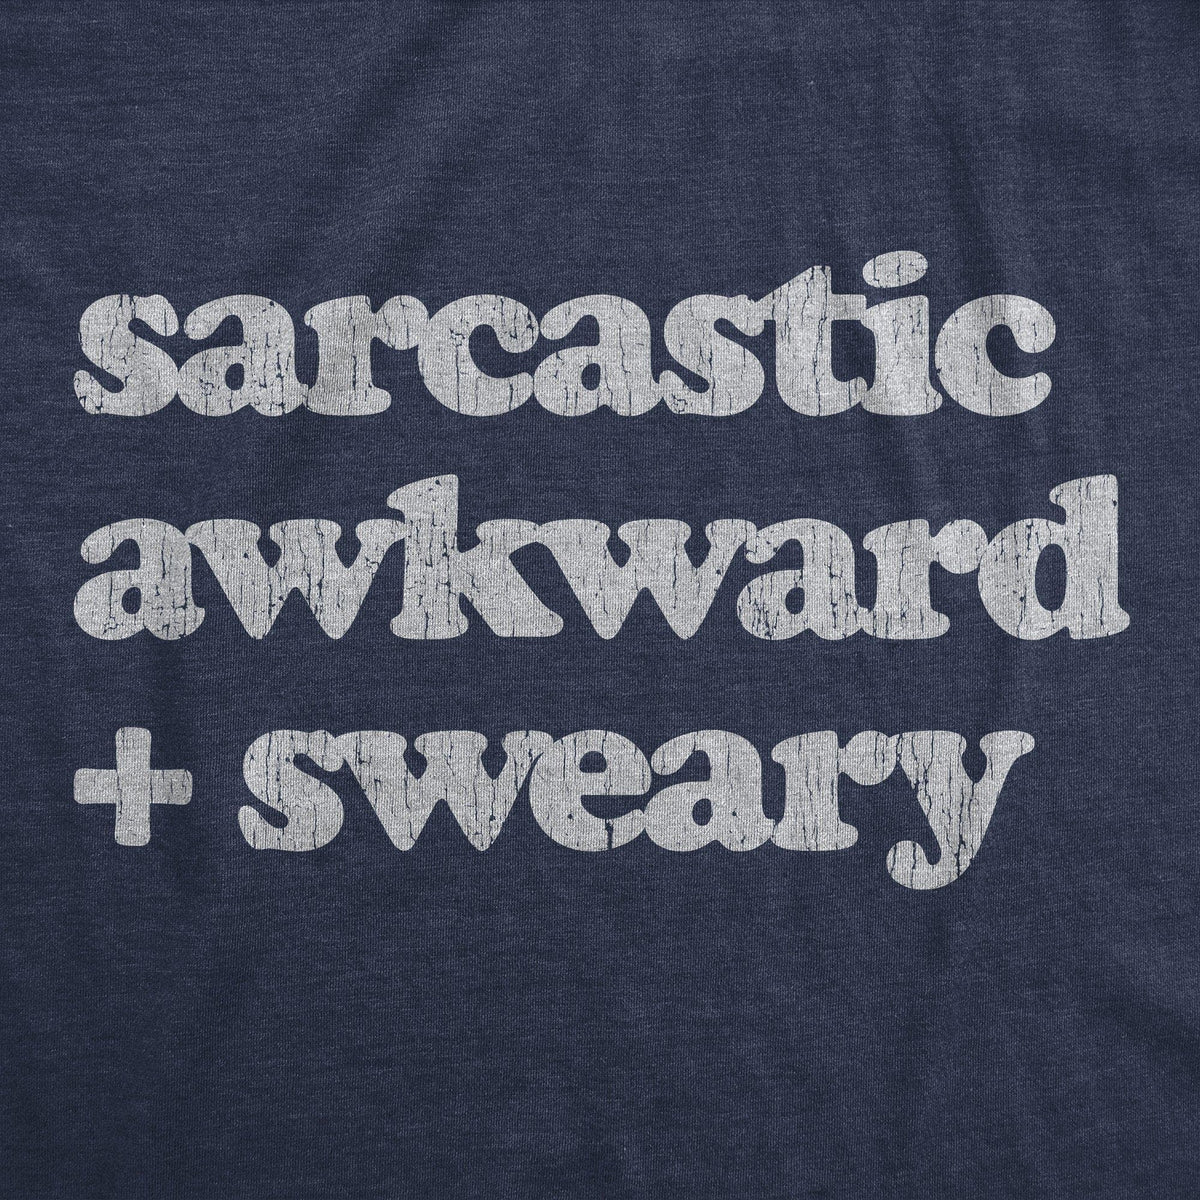 Sarcastic Awkward Sweary Women&#39;s Tshirt - Crazy Dog T-Shirts